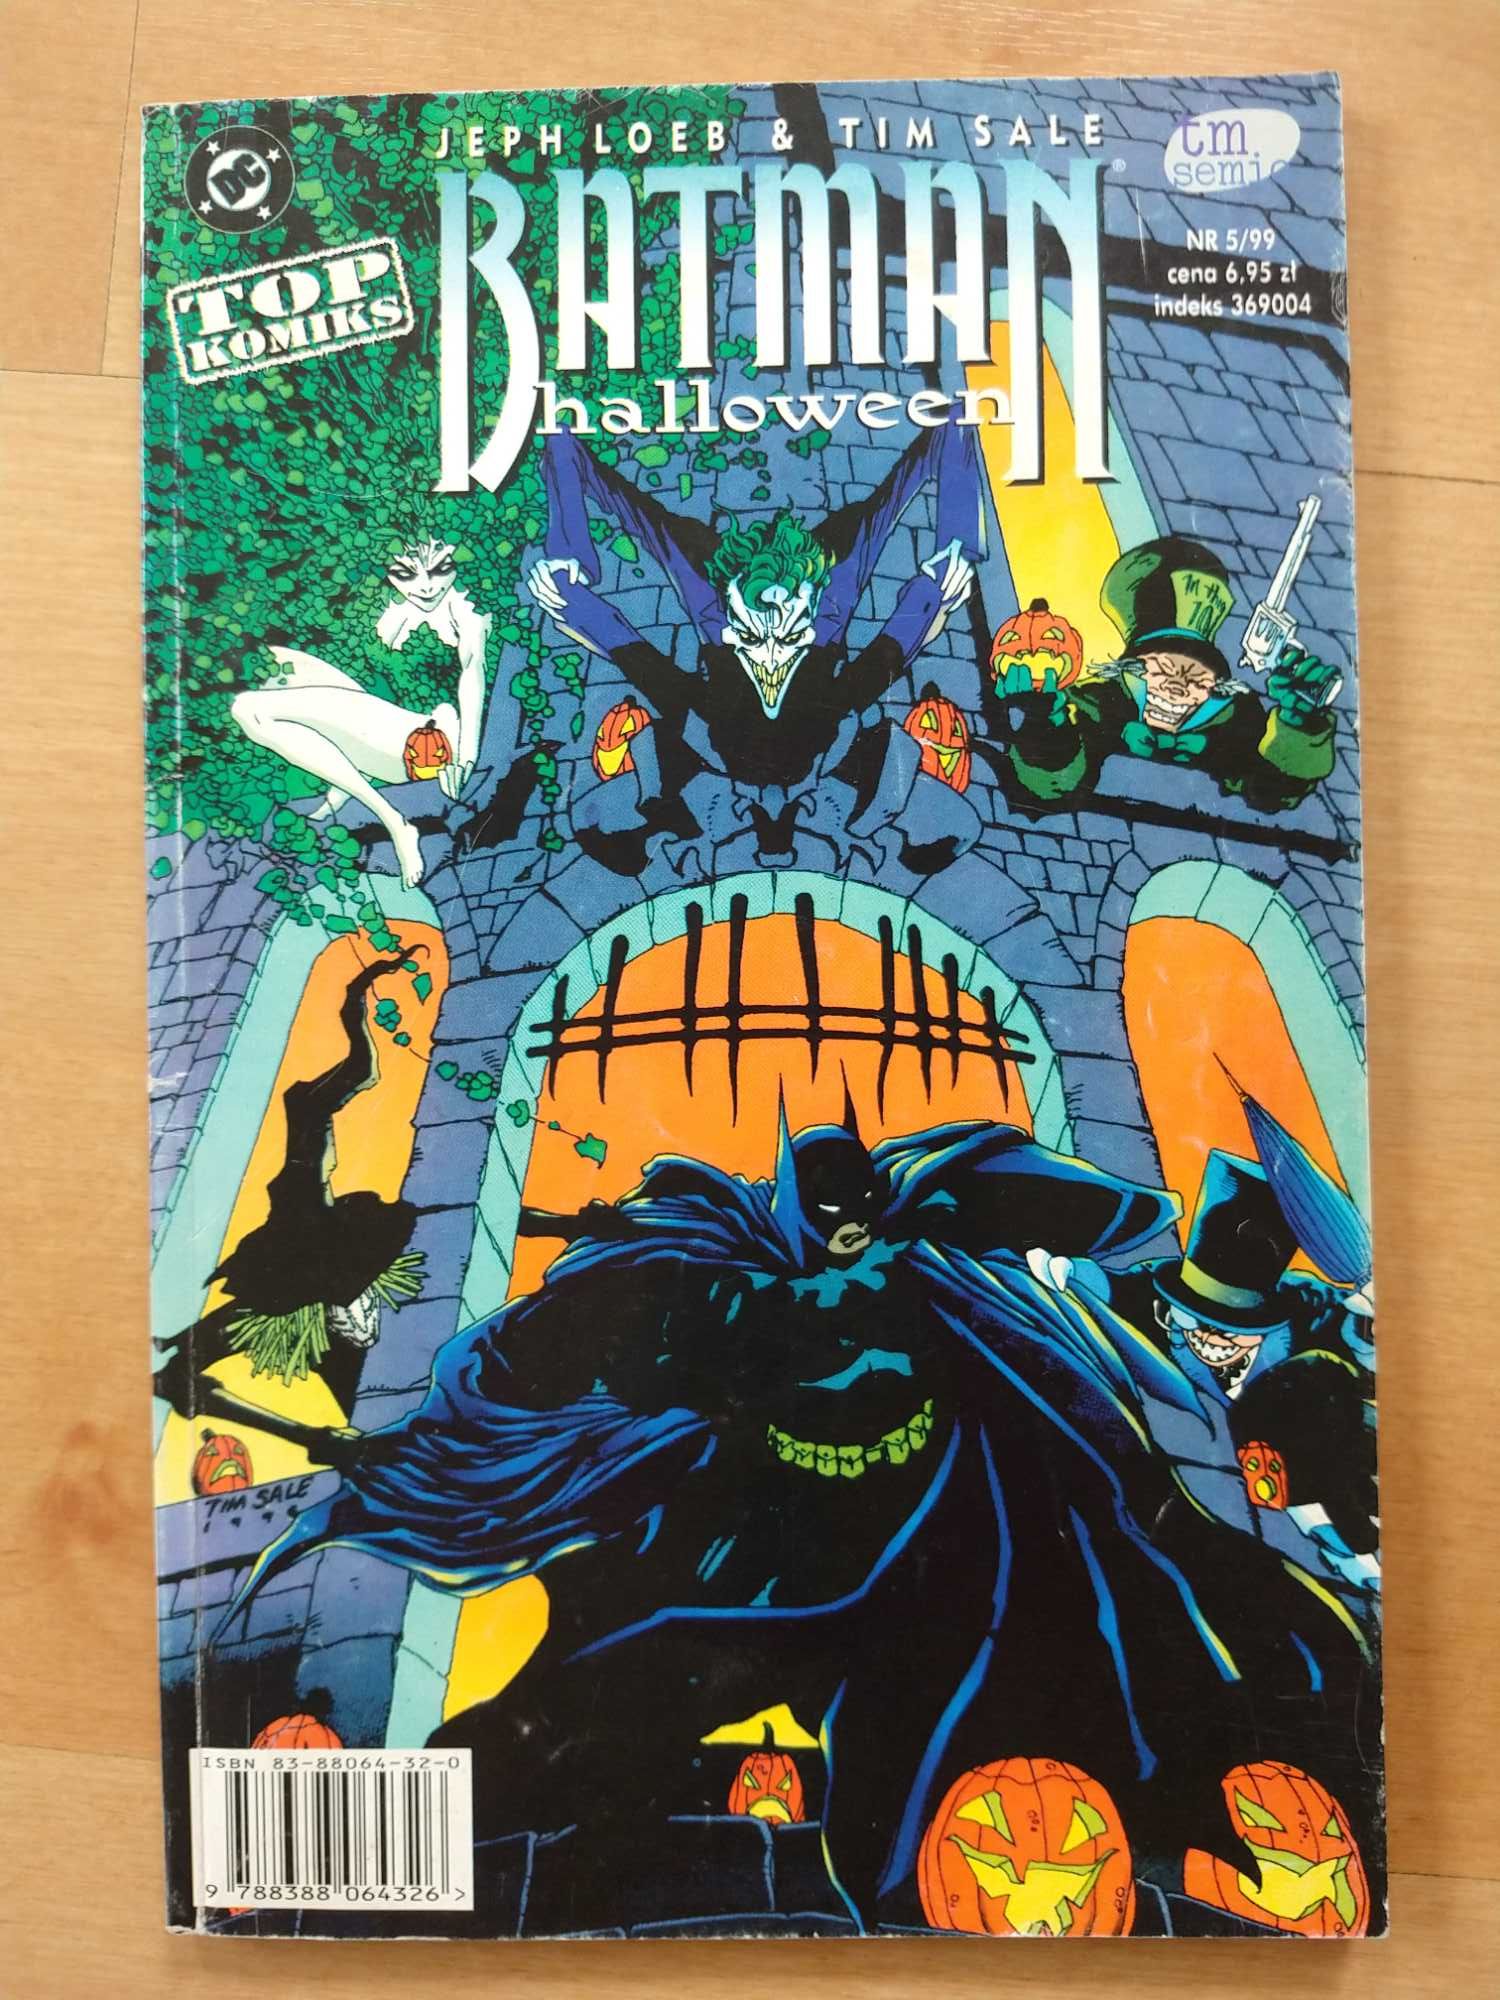 Batman halloween nr 5/99 Jeph Loeb i Tim Sale